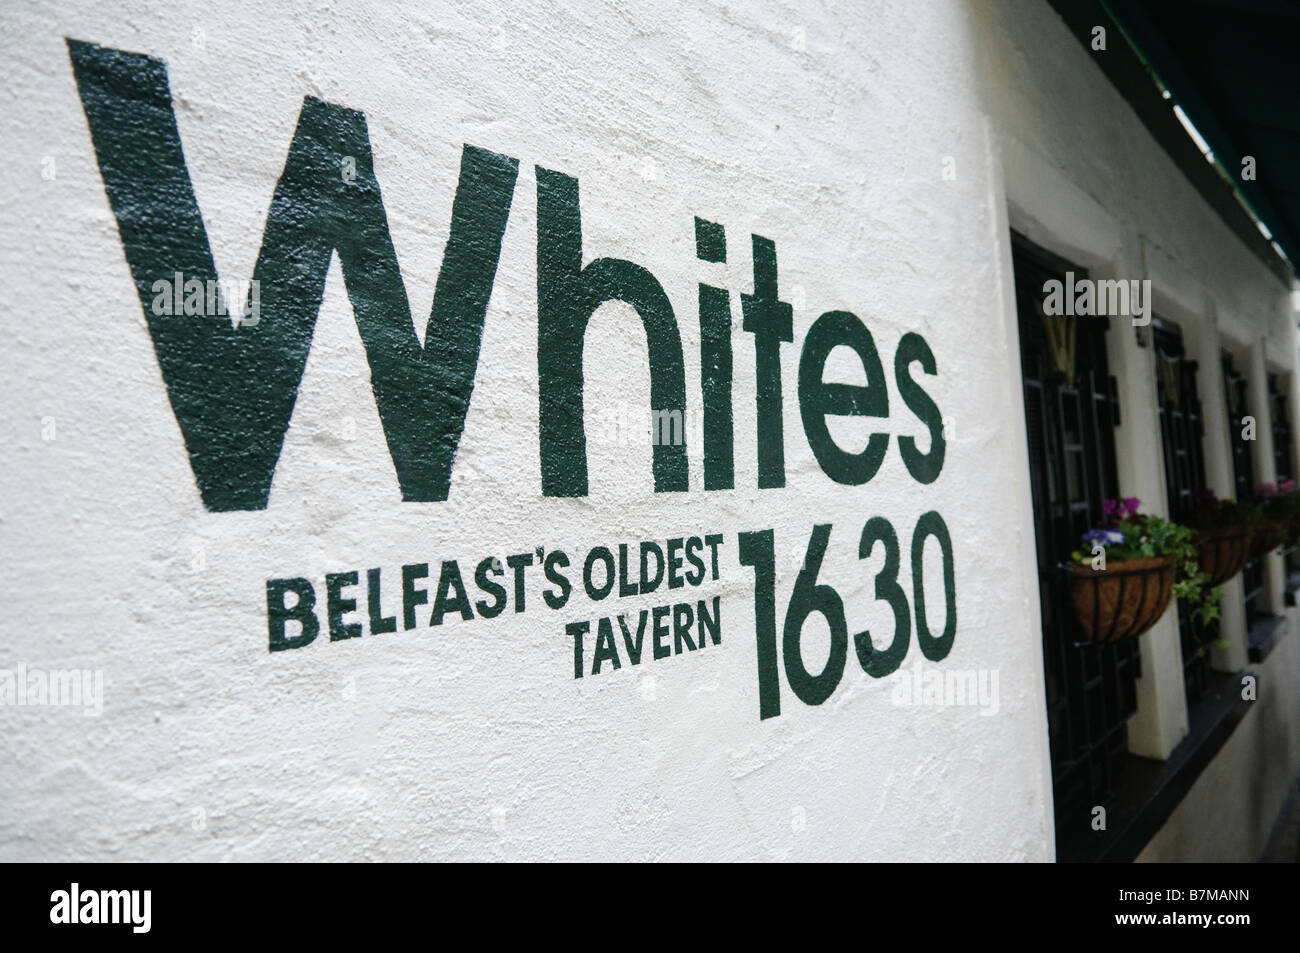 Front of Whites Tavern, Belfast Oldest tavern, established in 1630. Stock Photo